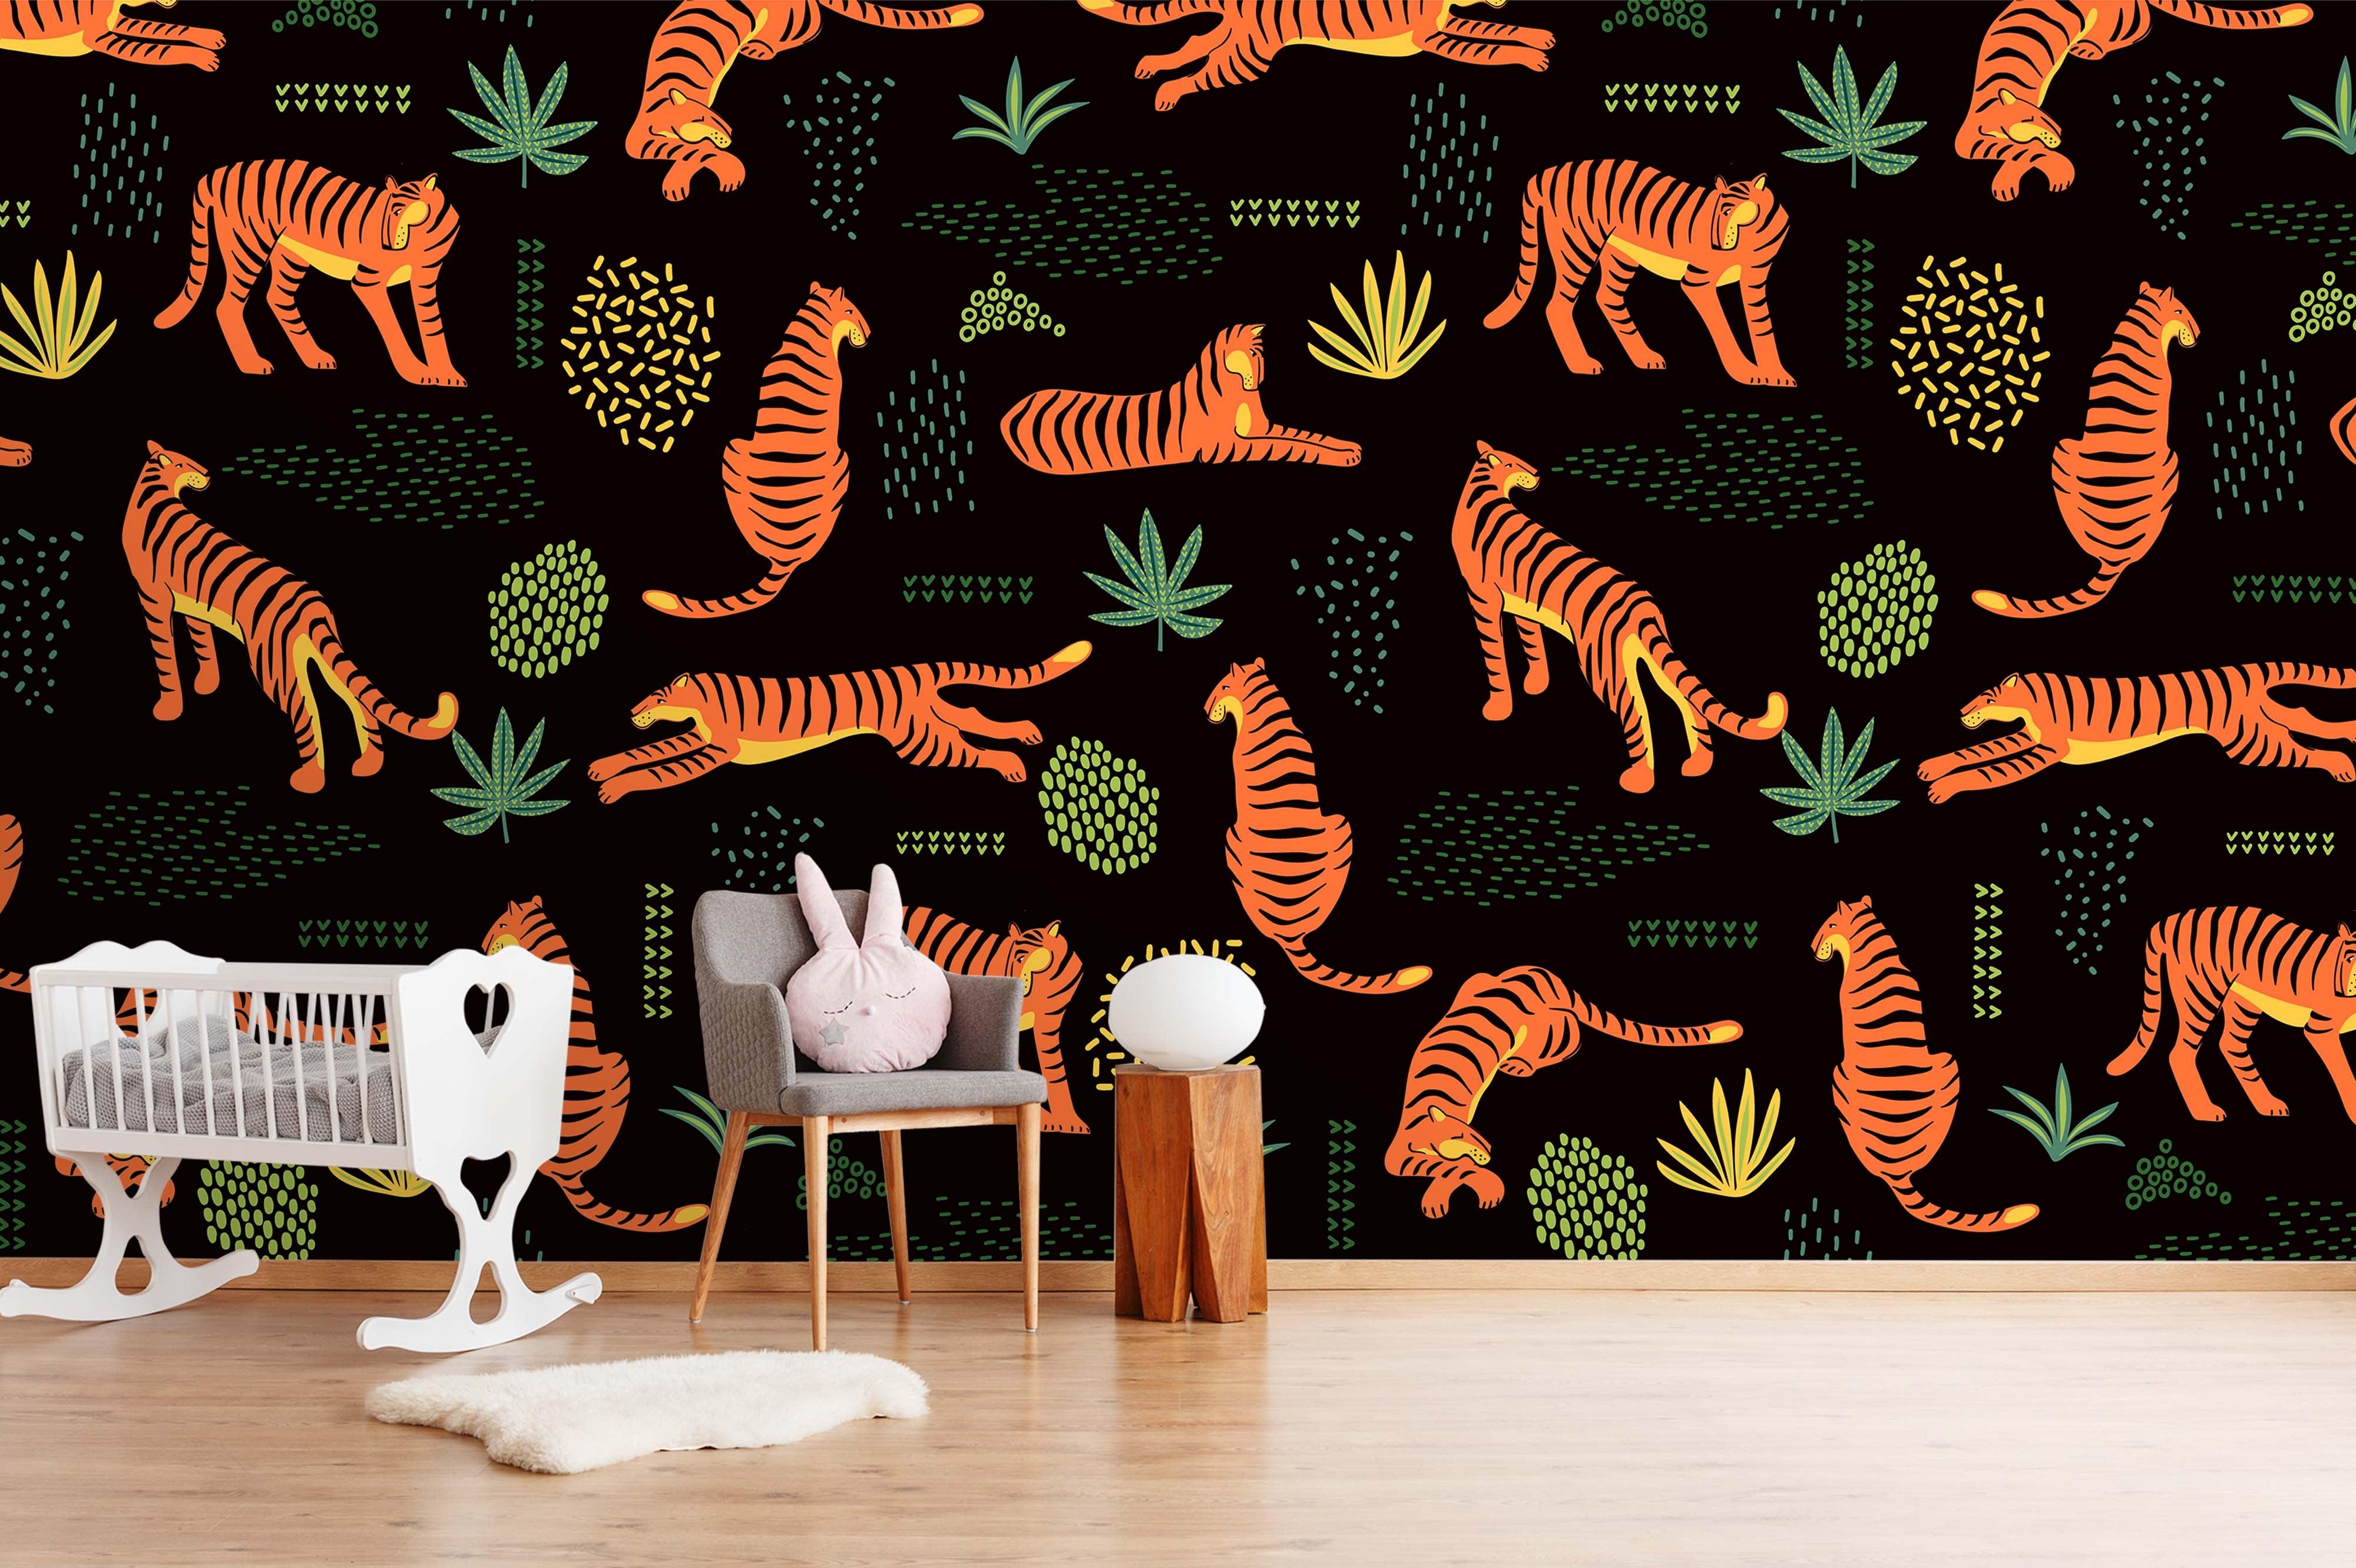 3D Tiger Wall Mural Wallpaper 57- Jess Art Decoration